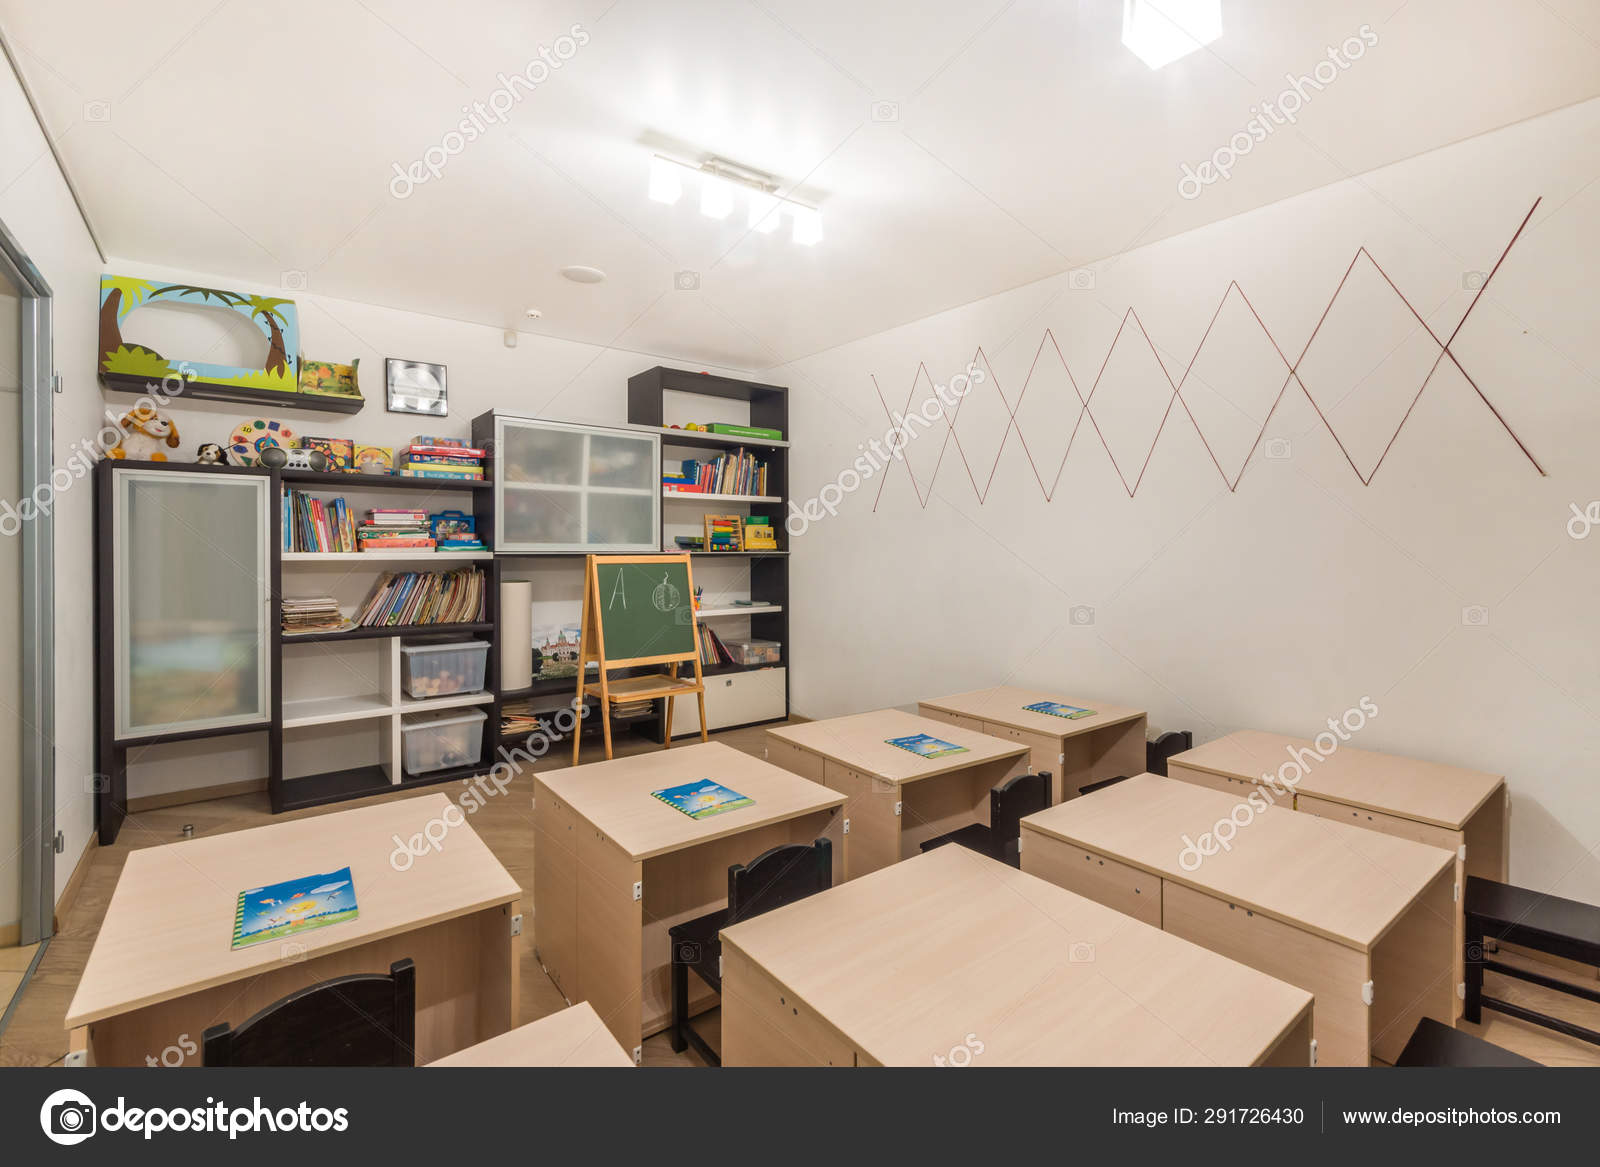 Preschool Classroom Interior Design Education Desks Chairs